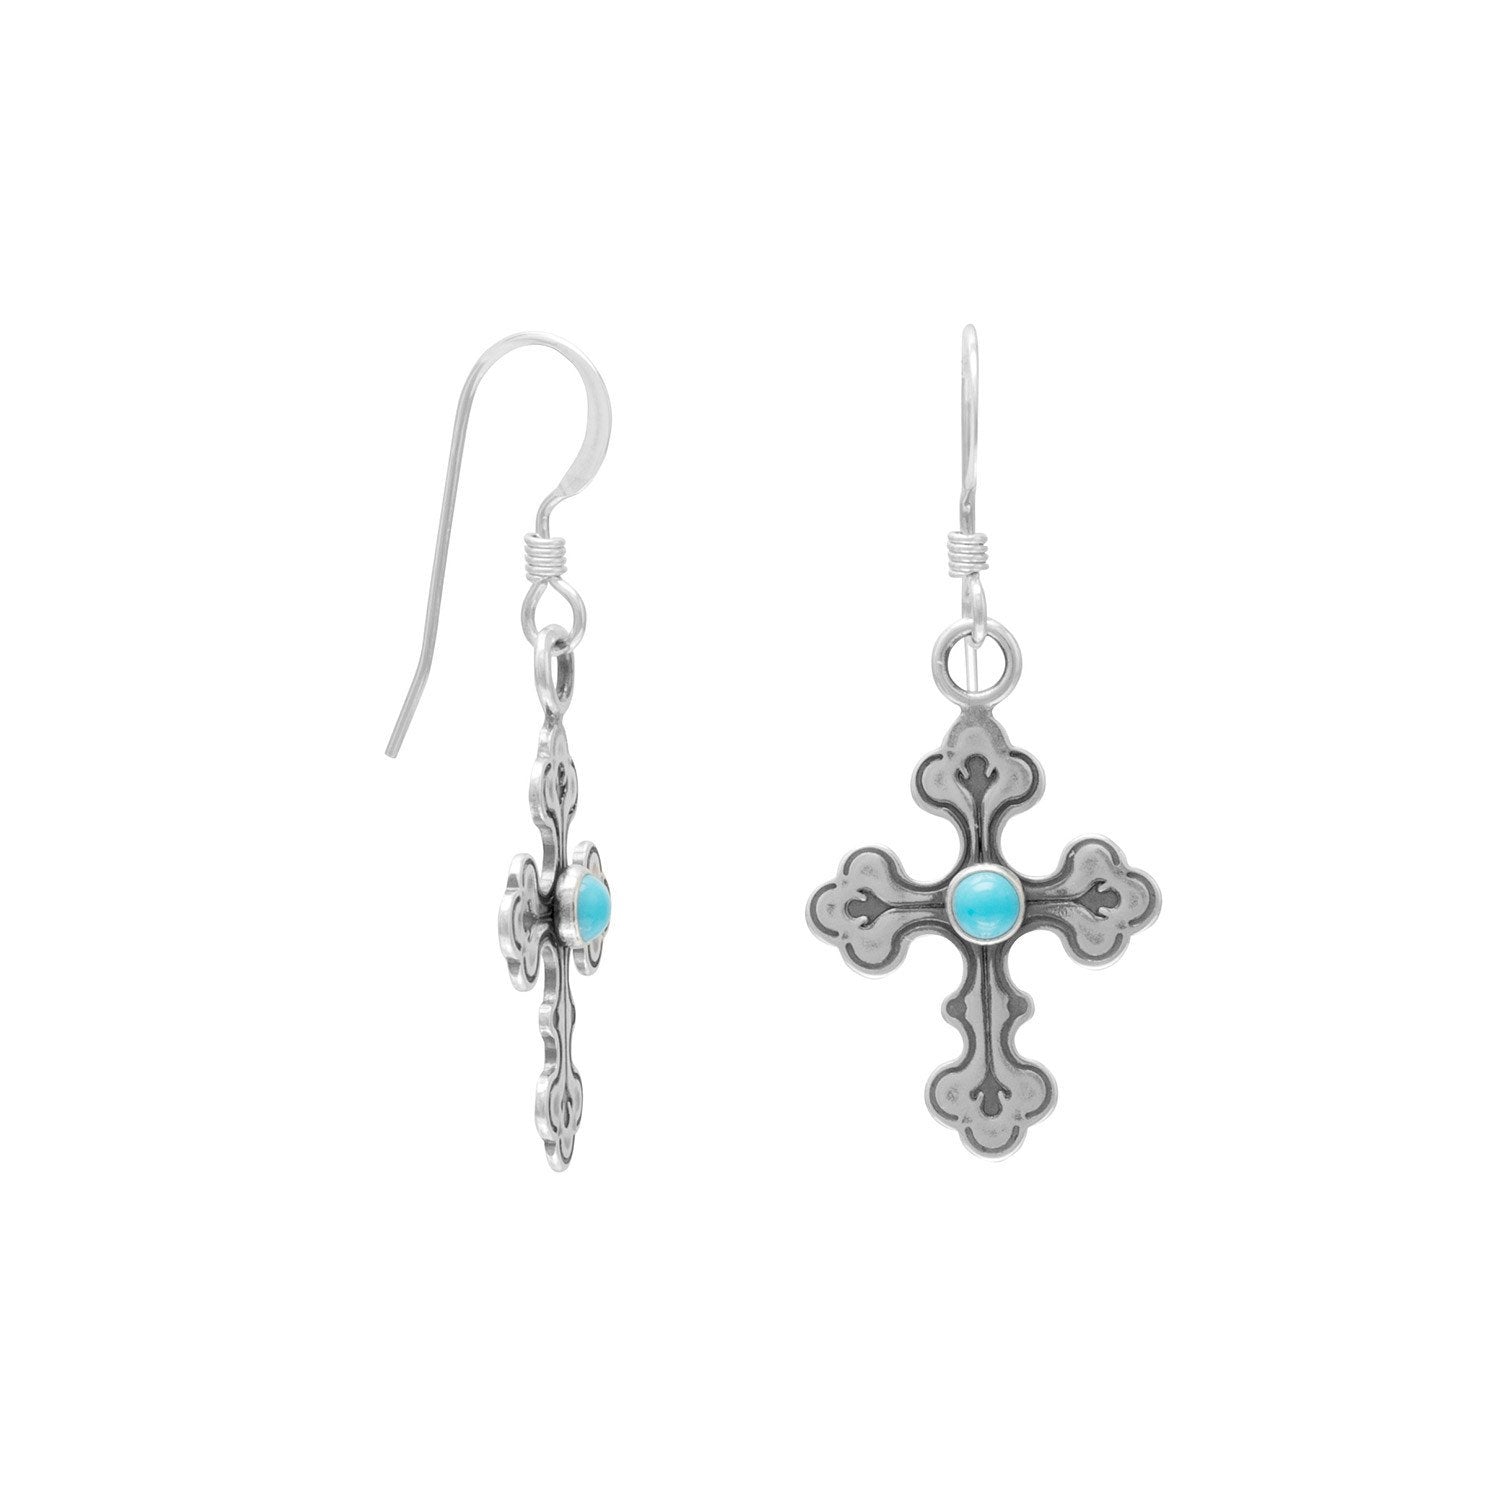 Oxidized Cross Earrings with Turquoise Center - Joyeria Lady